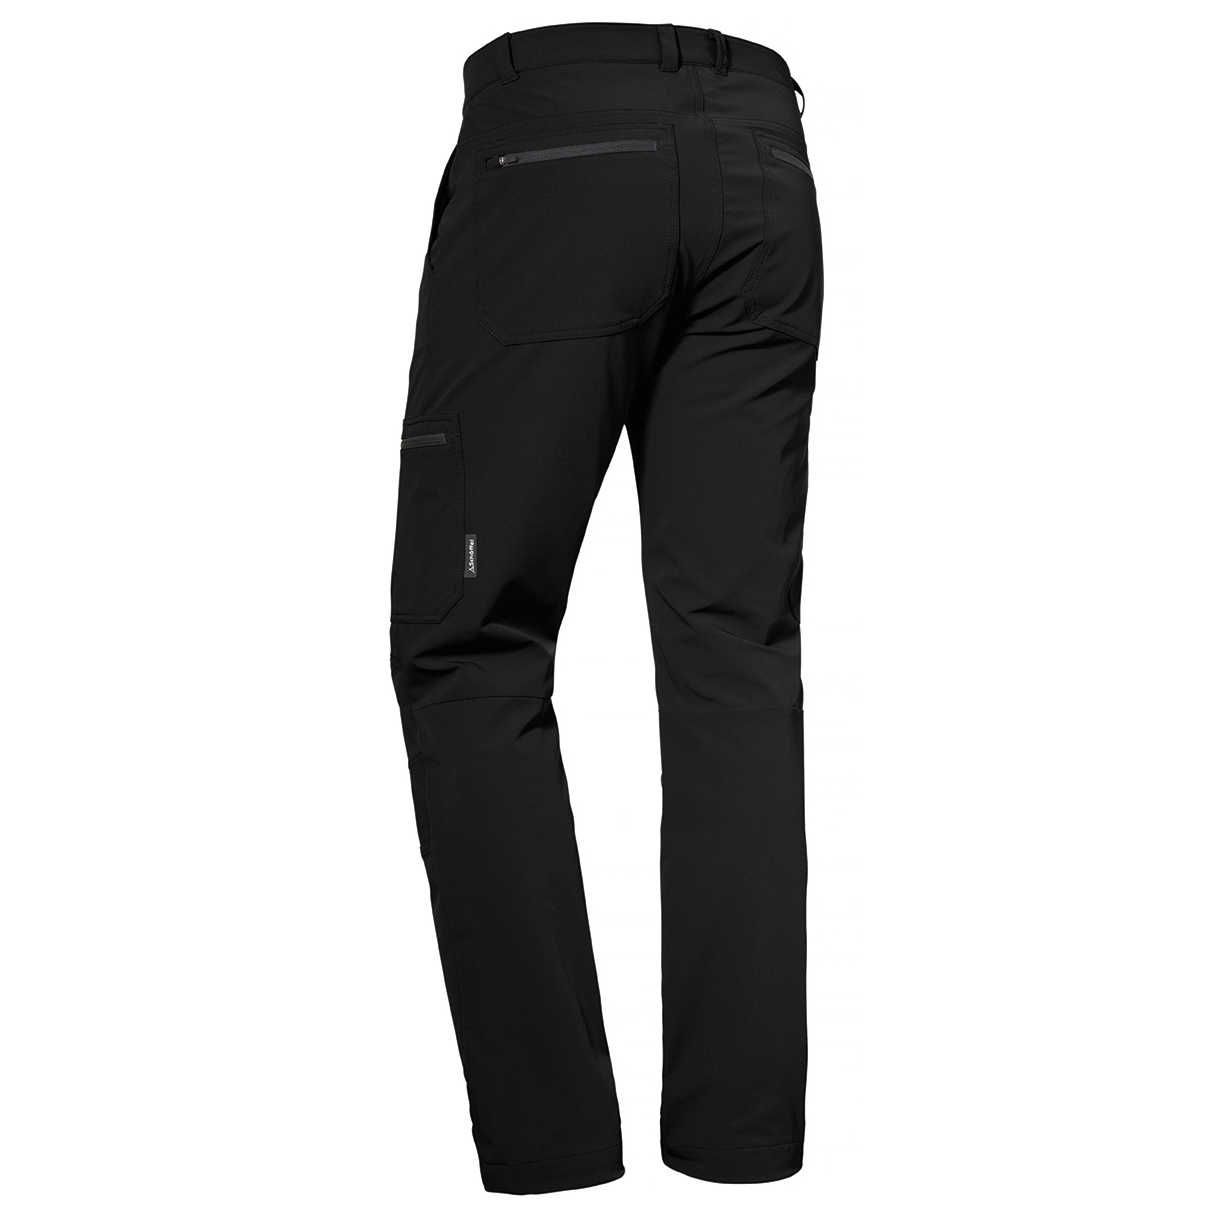 Pantalon rando hivernale Homme Florenz 1 - Noir